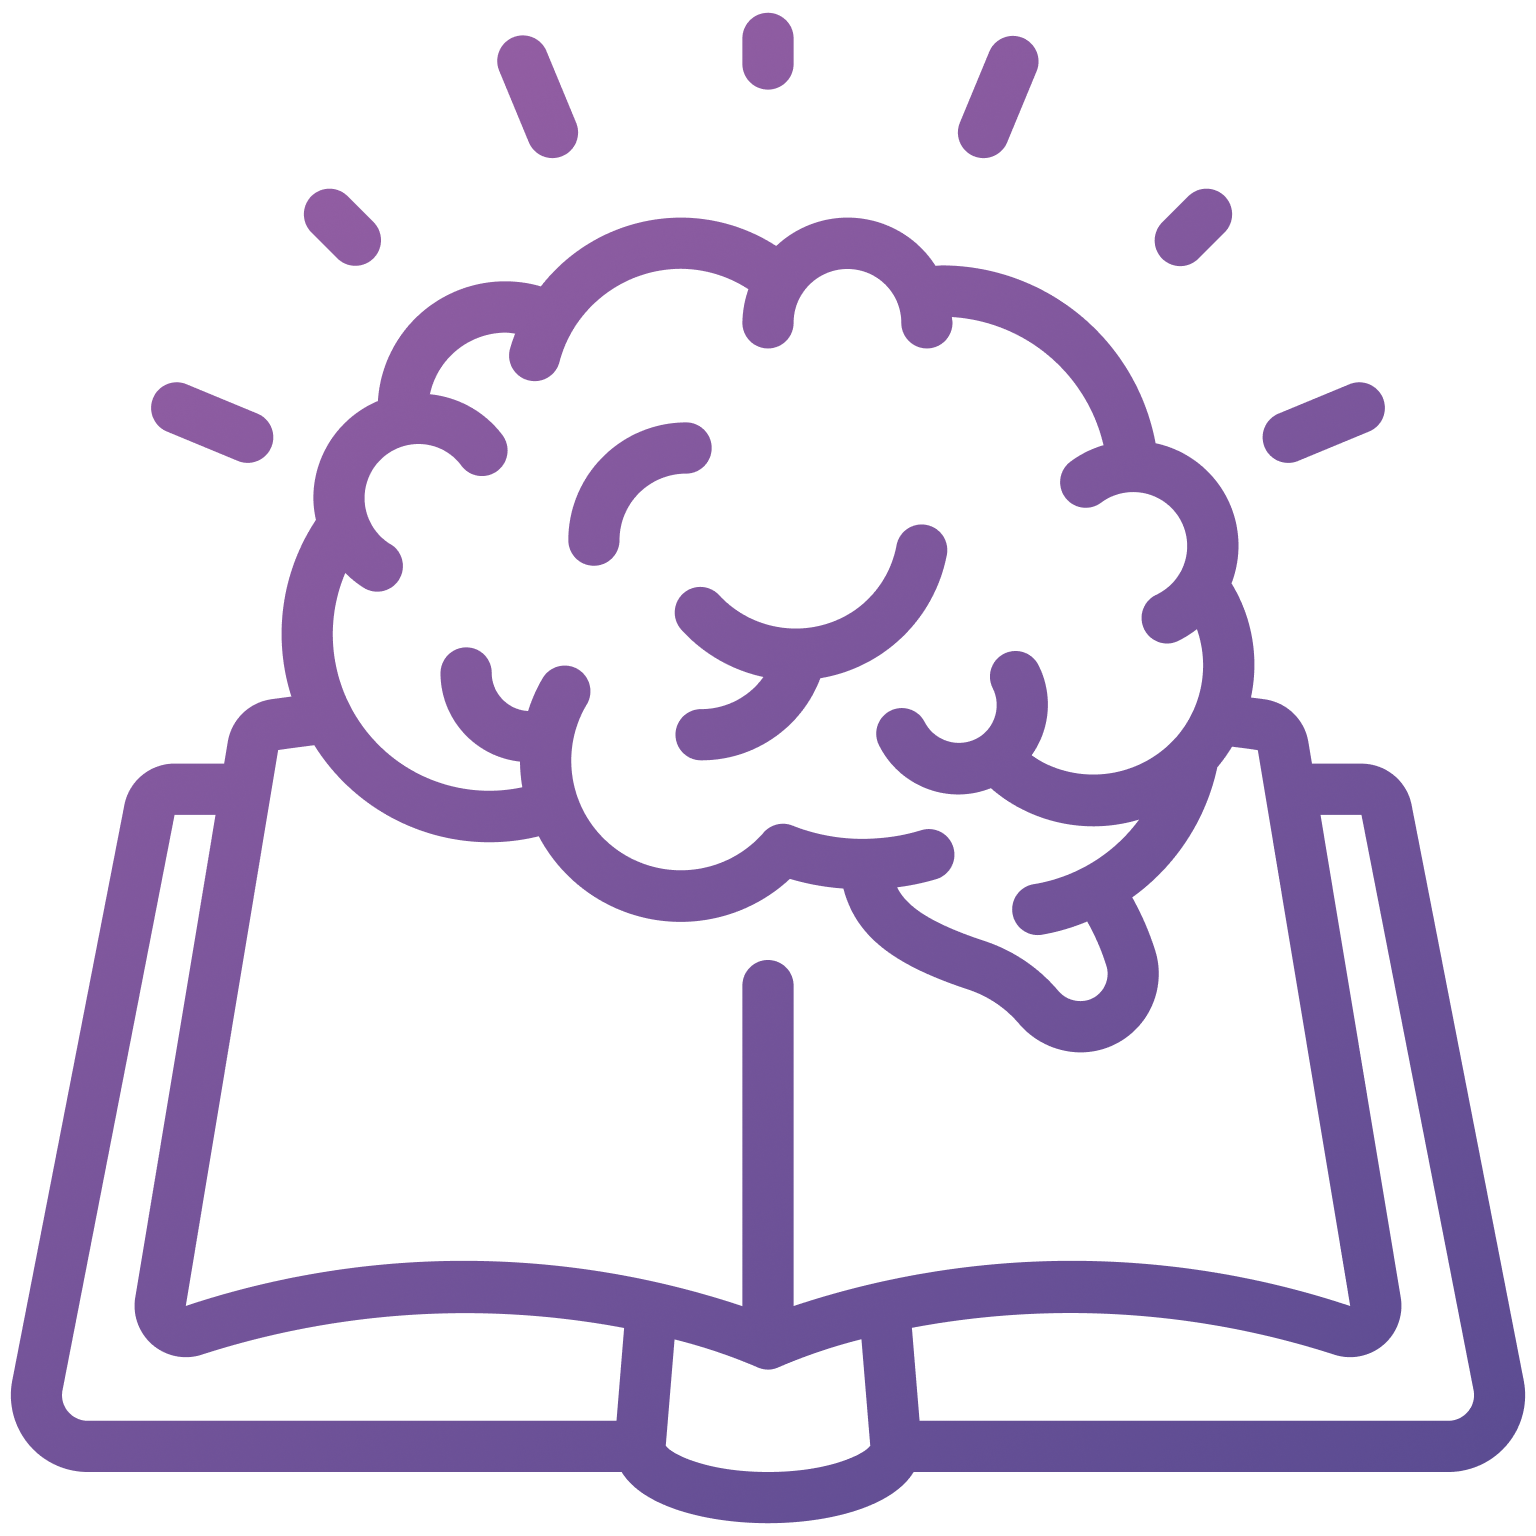 Brain and book icon